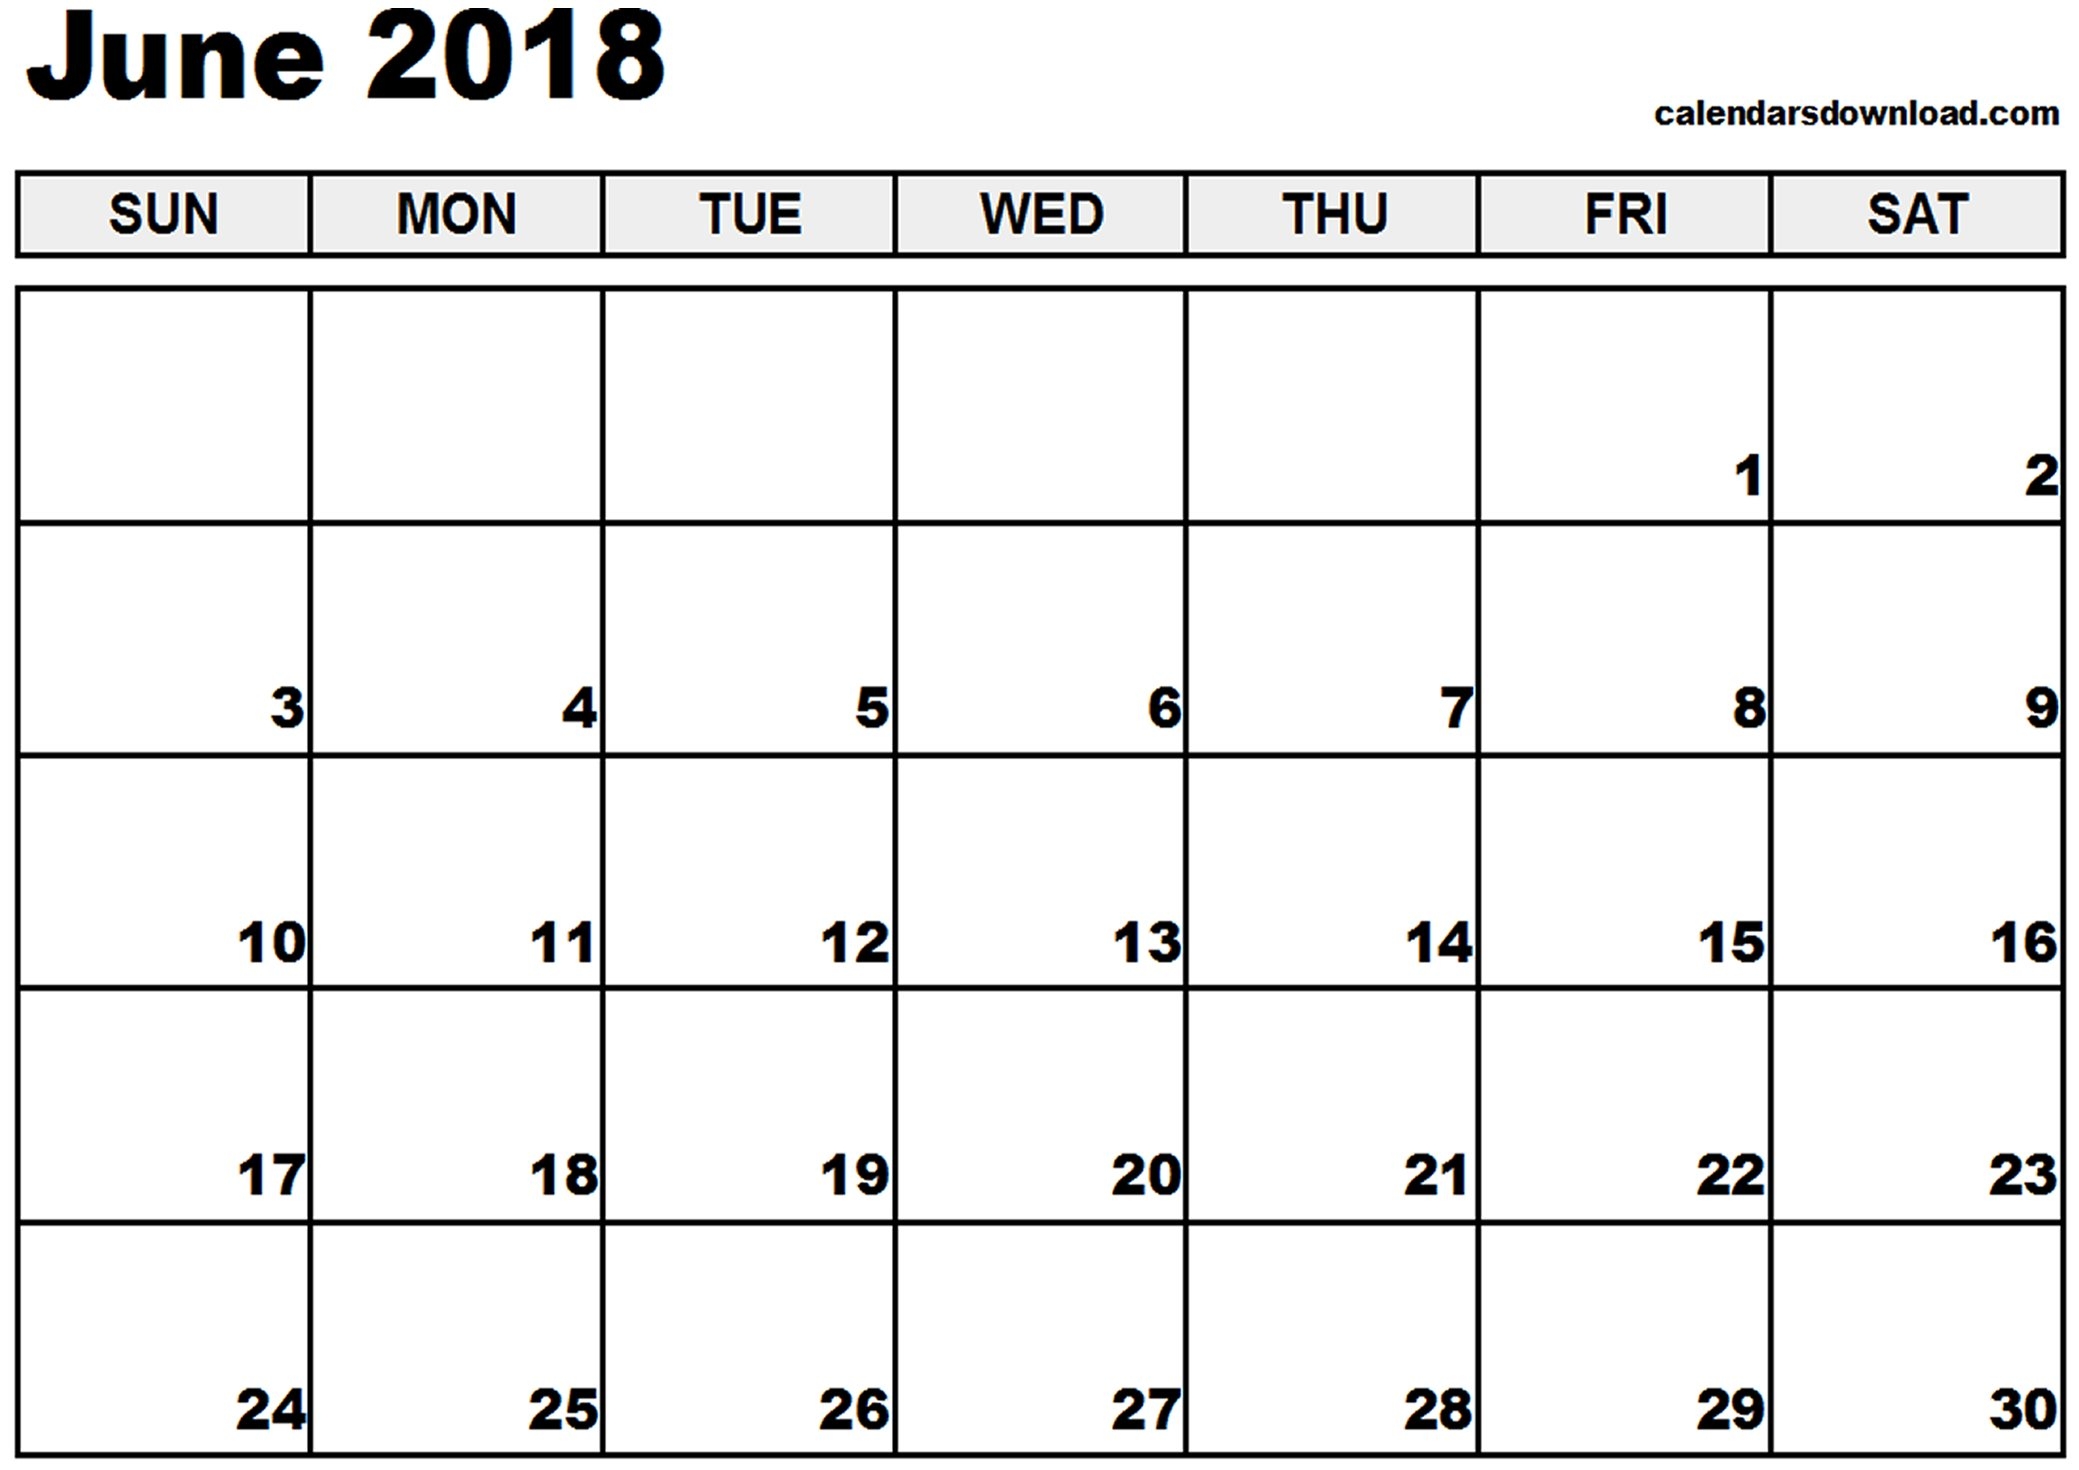 june-2018-calendar-free-download-pdf-and-images